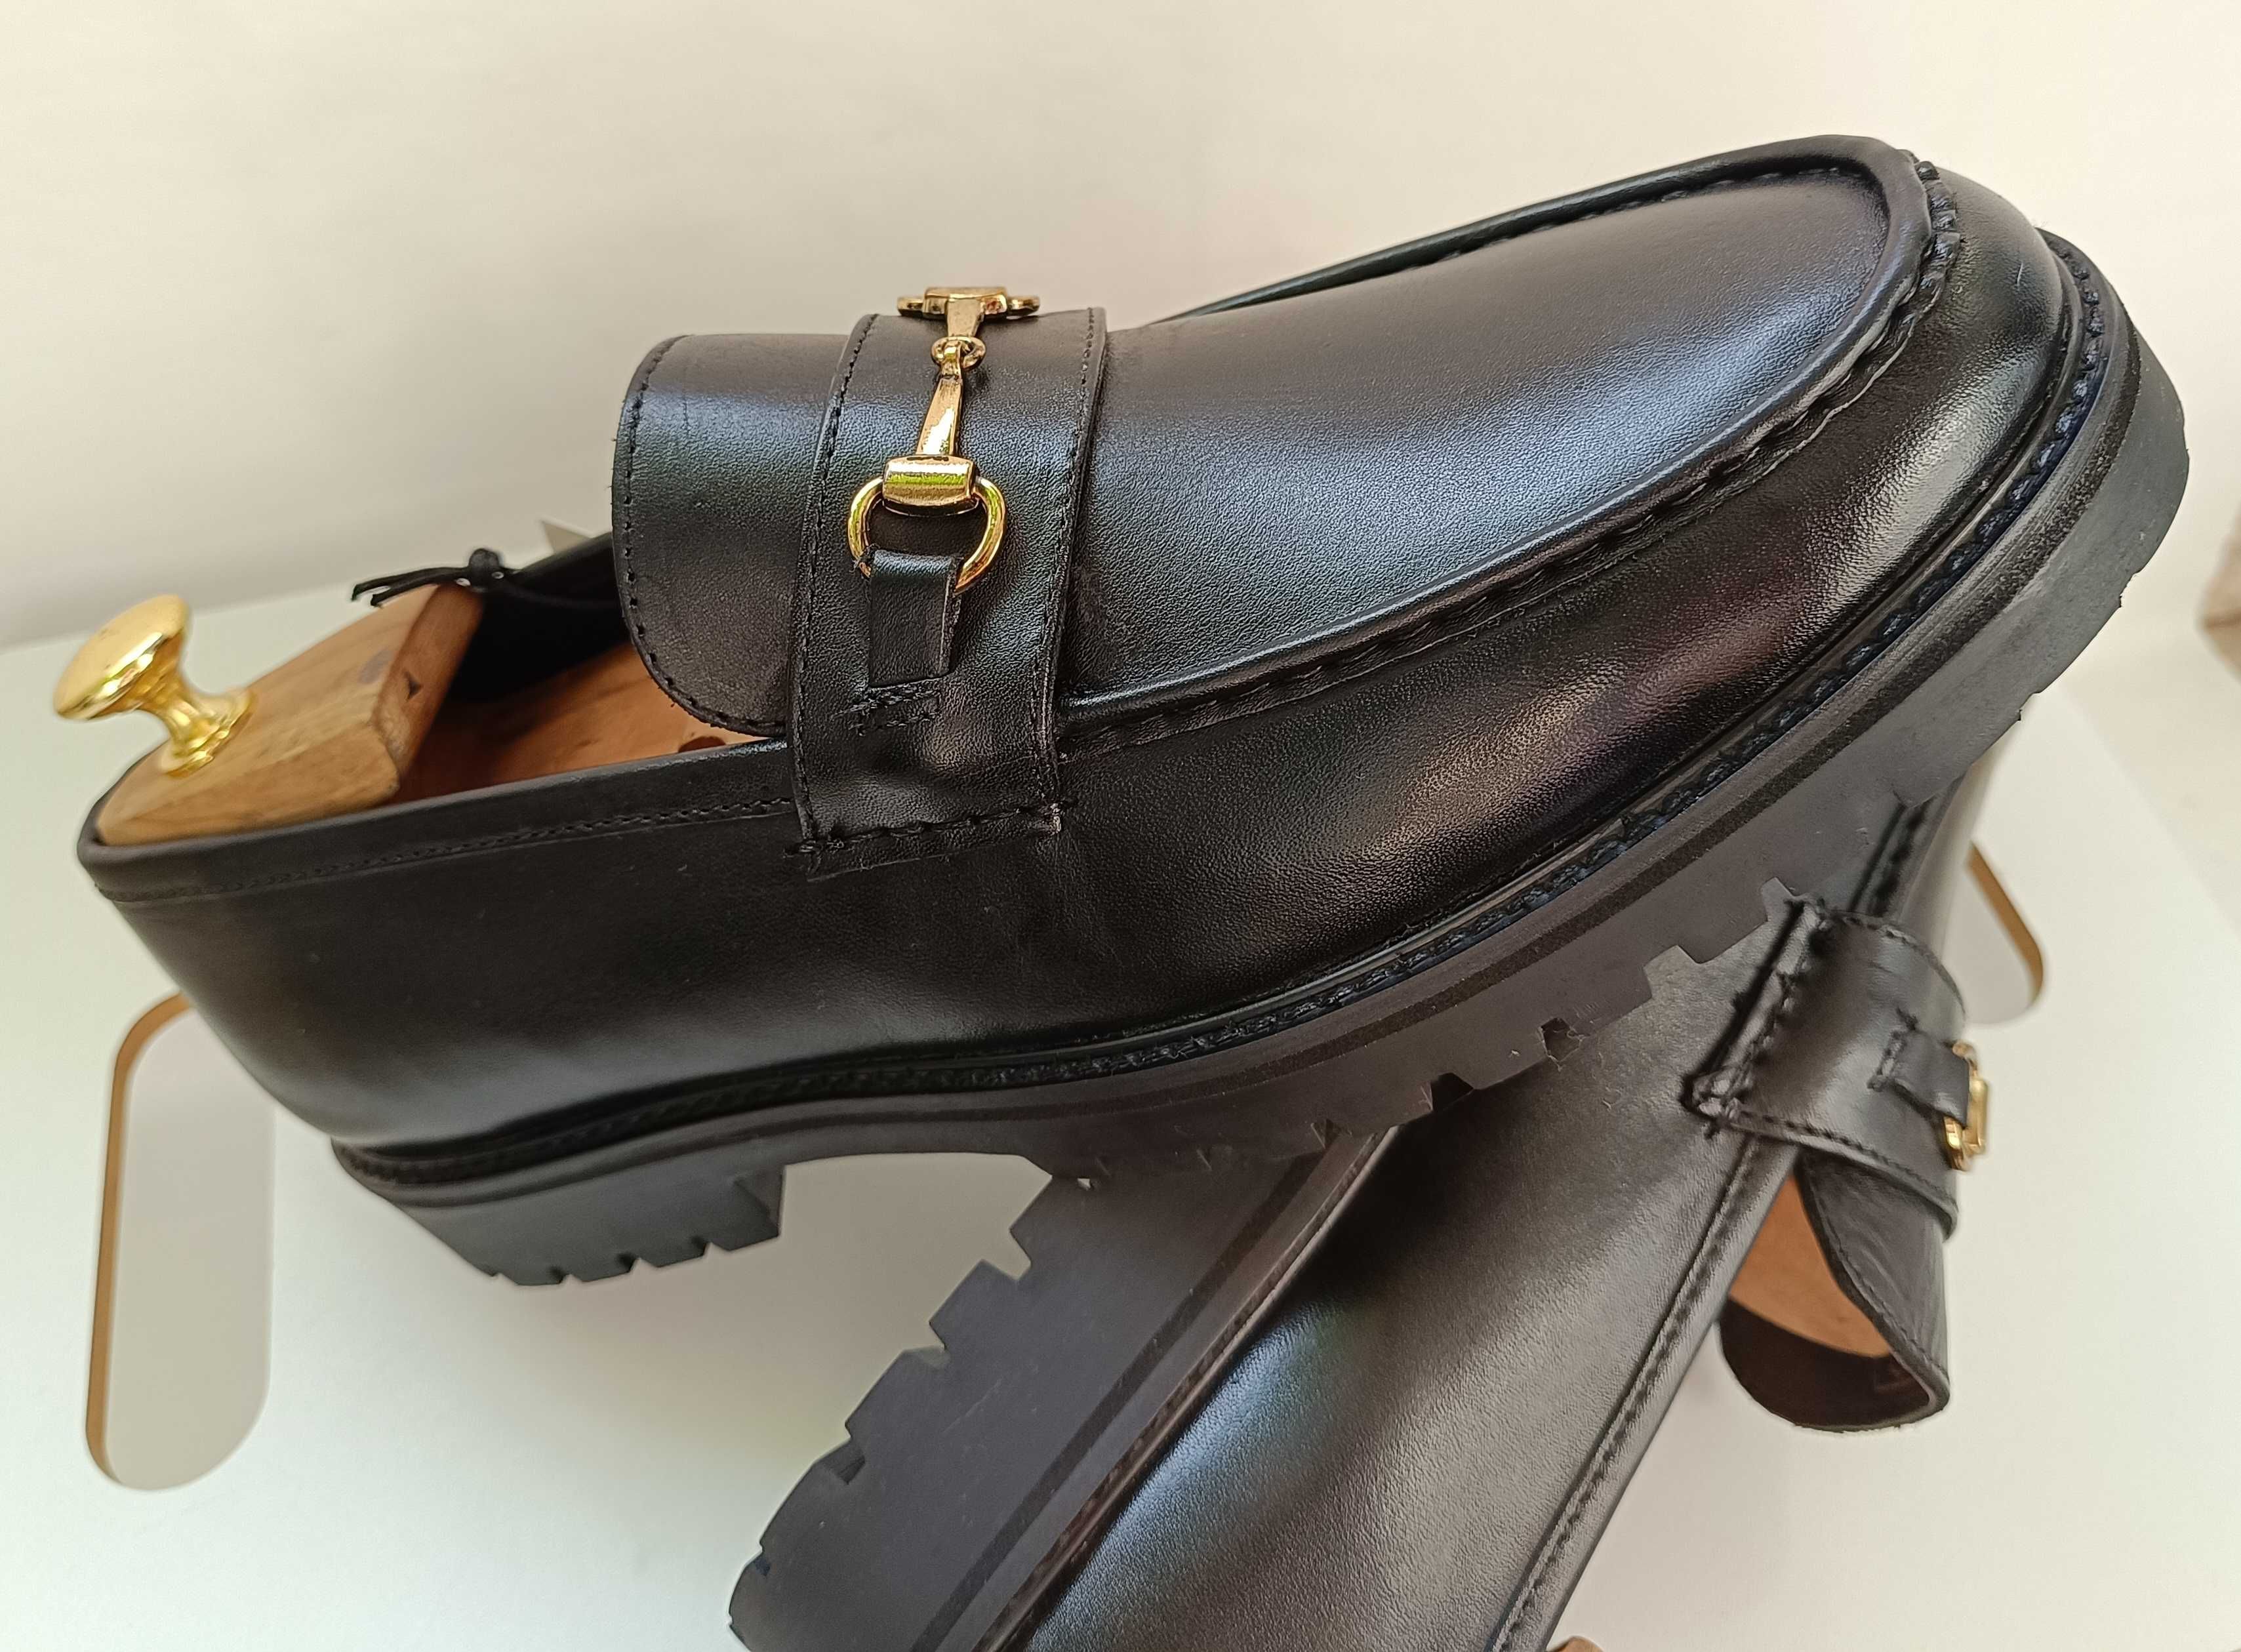 Pantofi loafer 42 bit moc toe ZIGN London NOI piele naturala premium